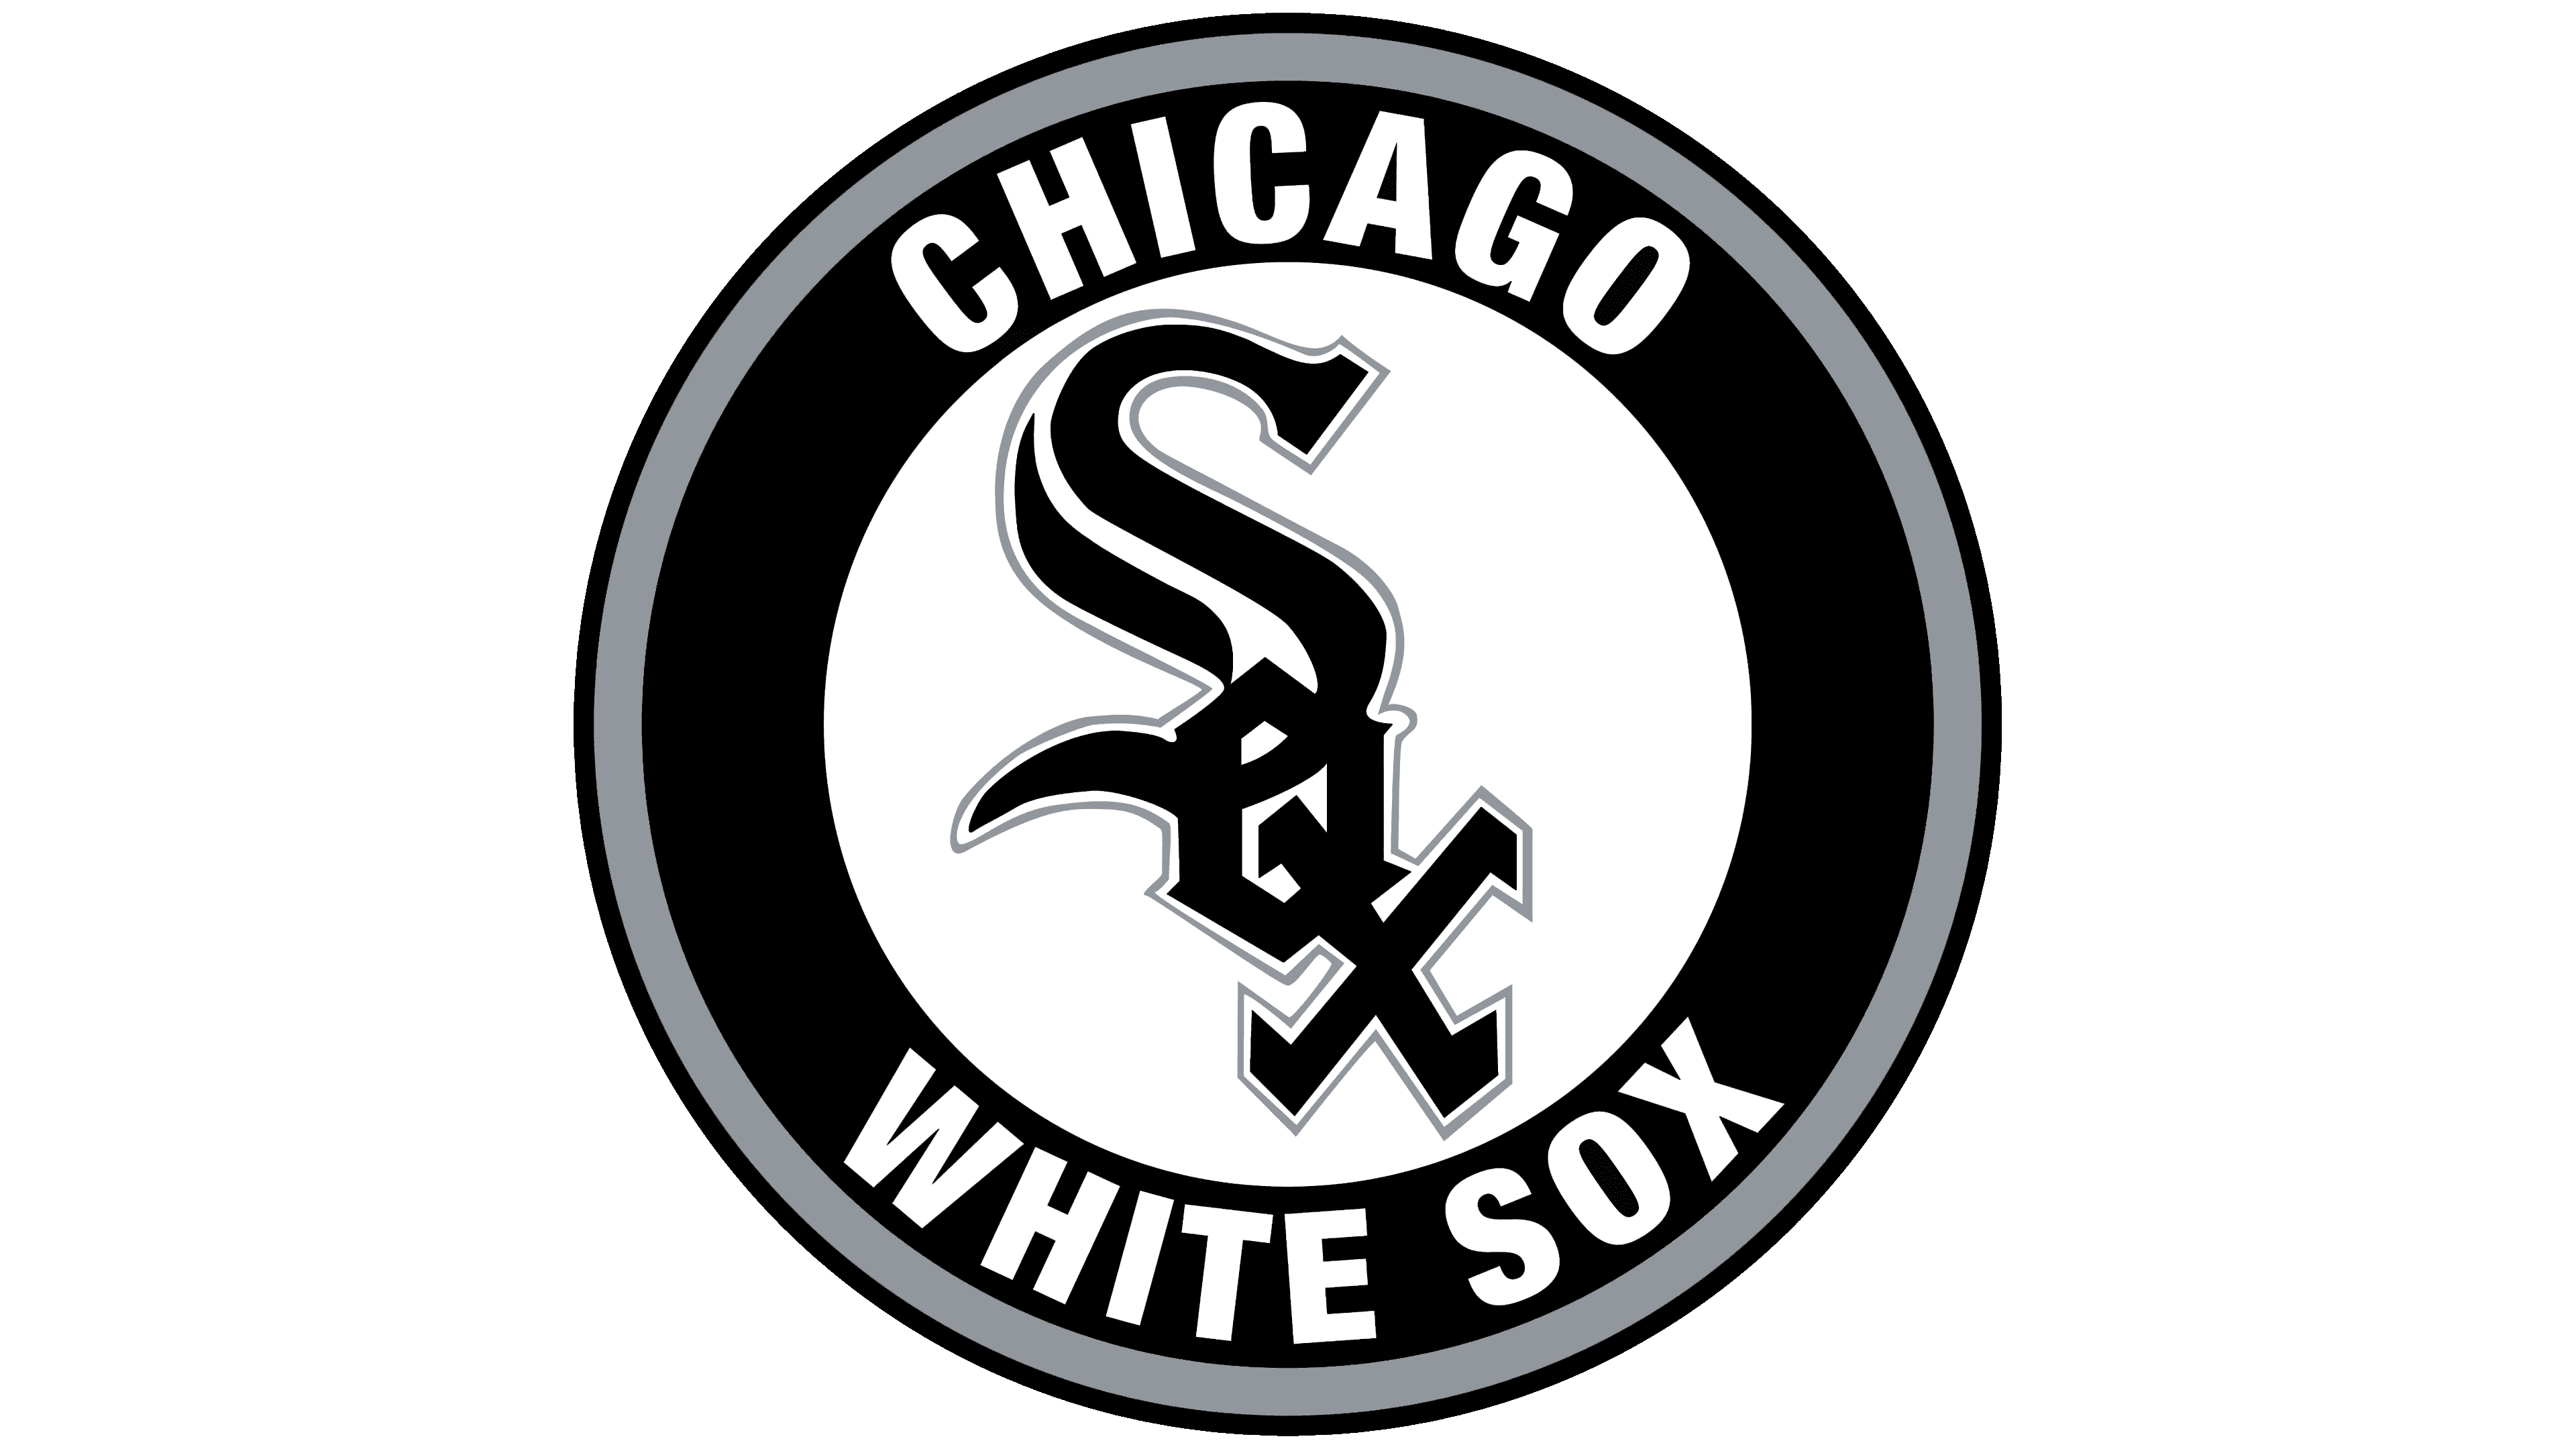 Chicago White Sox Nail Polish - wide 2